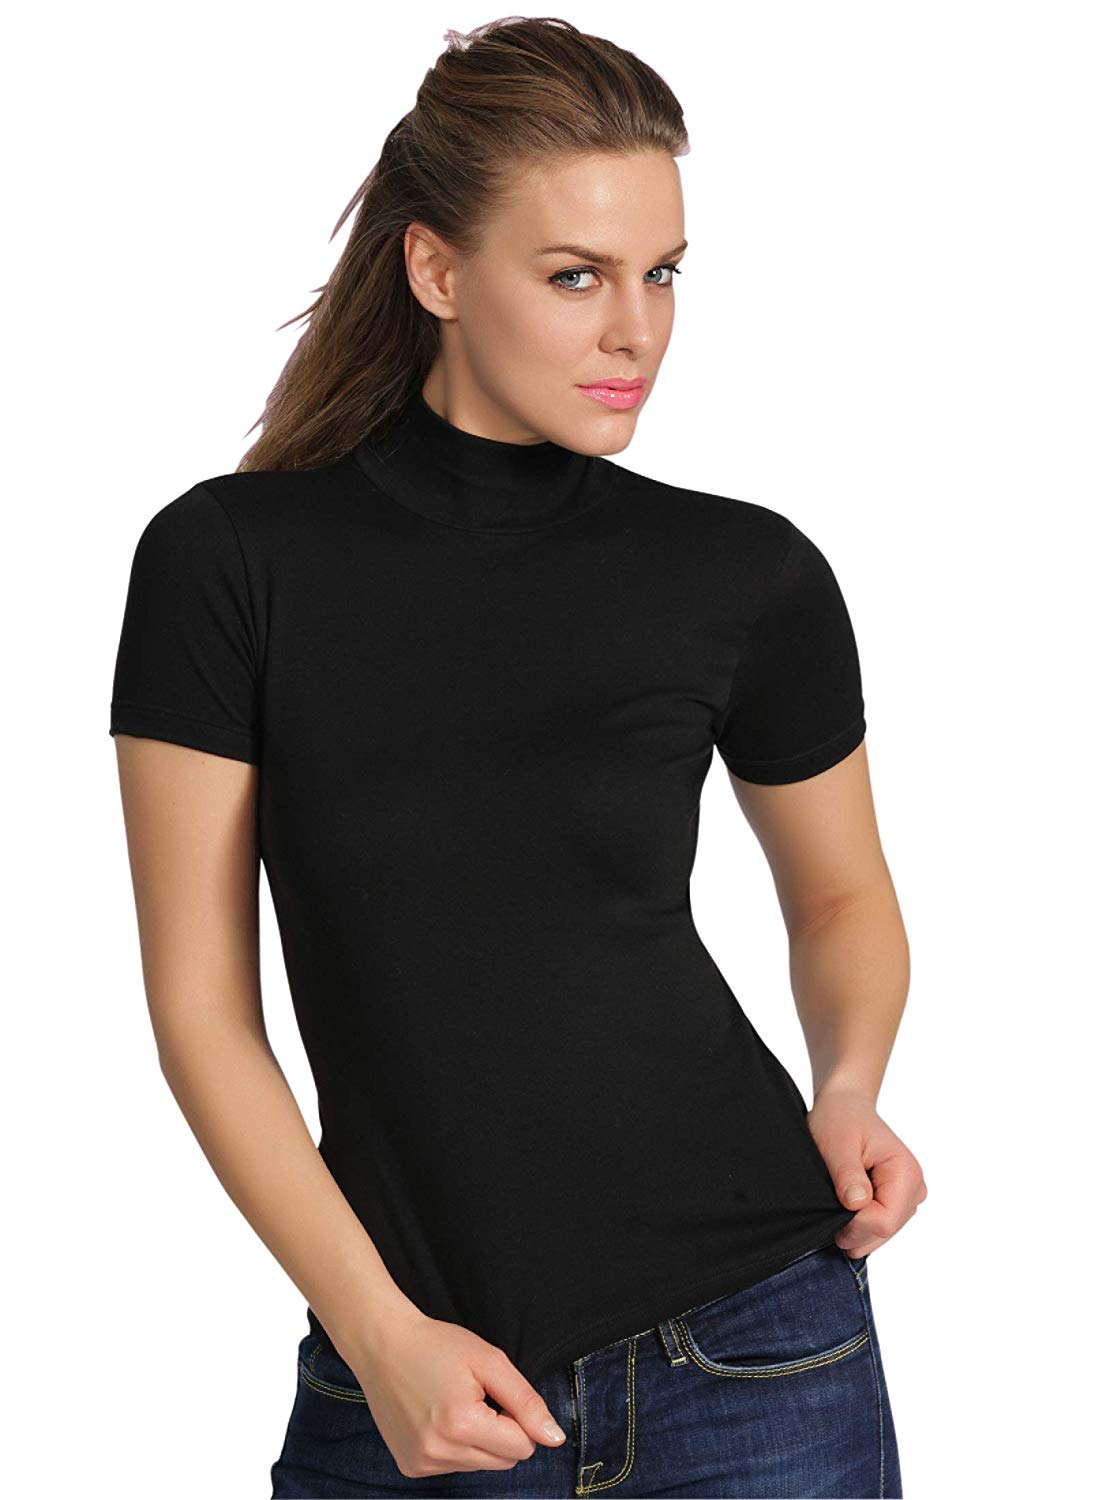 Turtleneck t-shirt - Woman